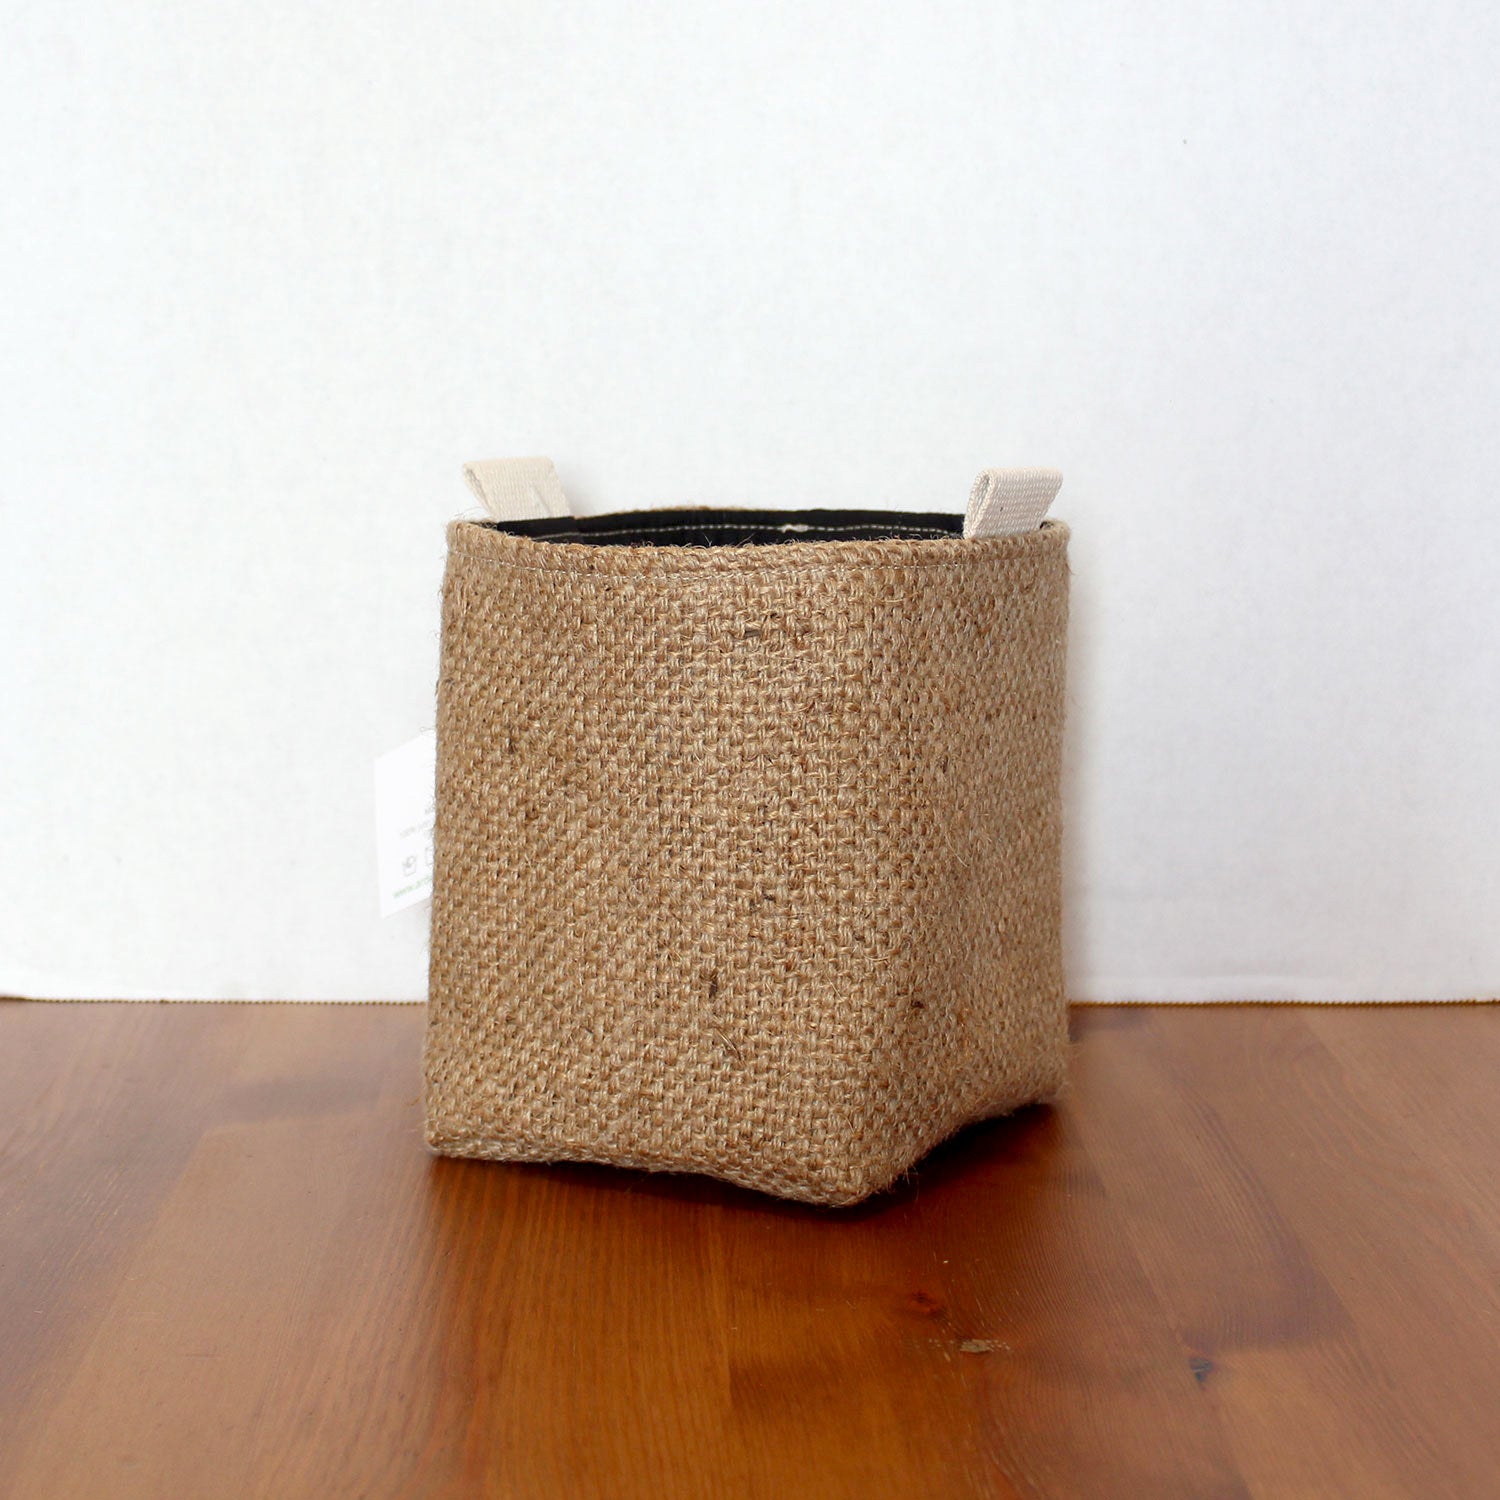 Upcycled Coffee Sack Basket - Small - plain